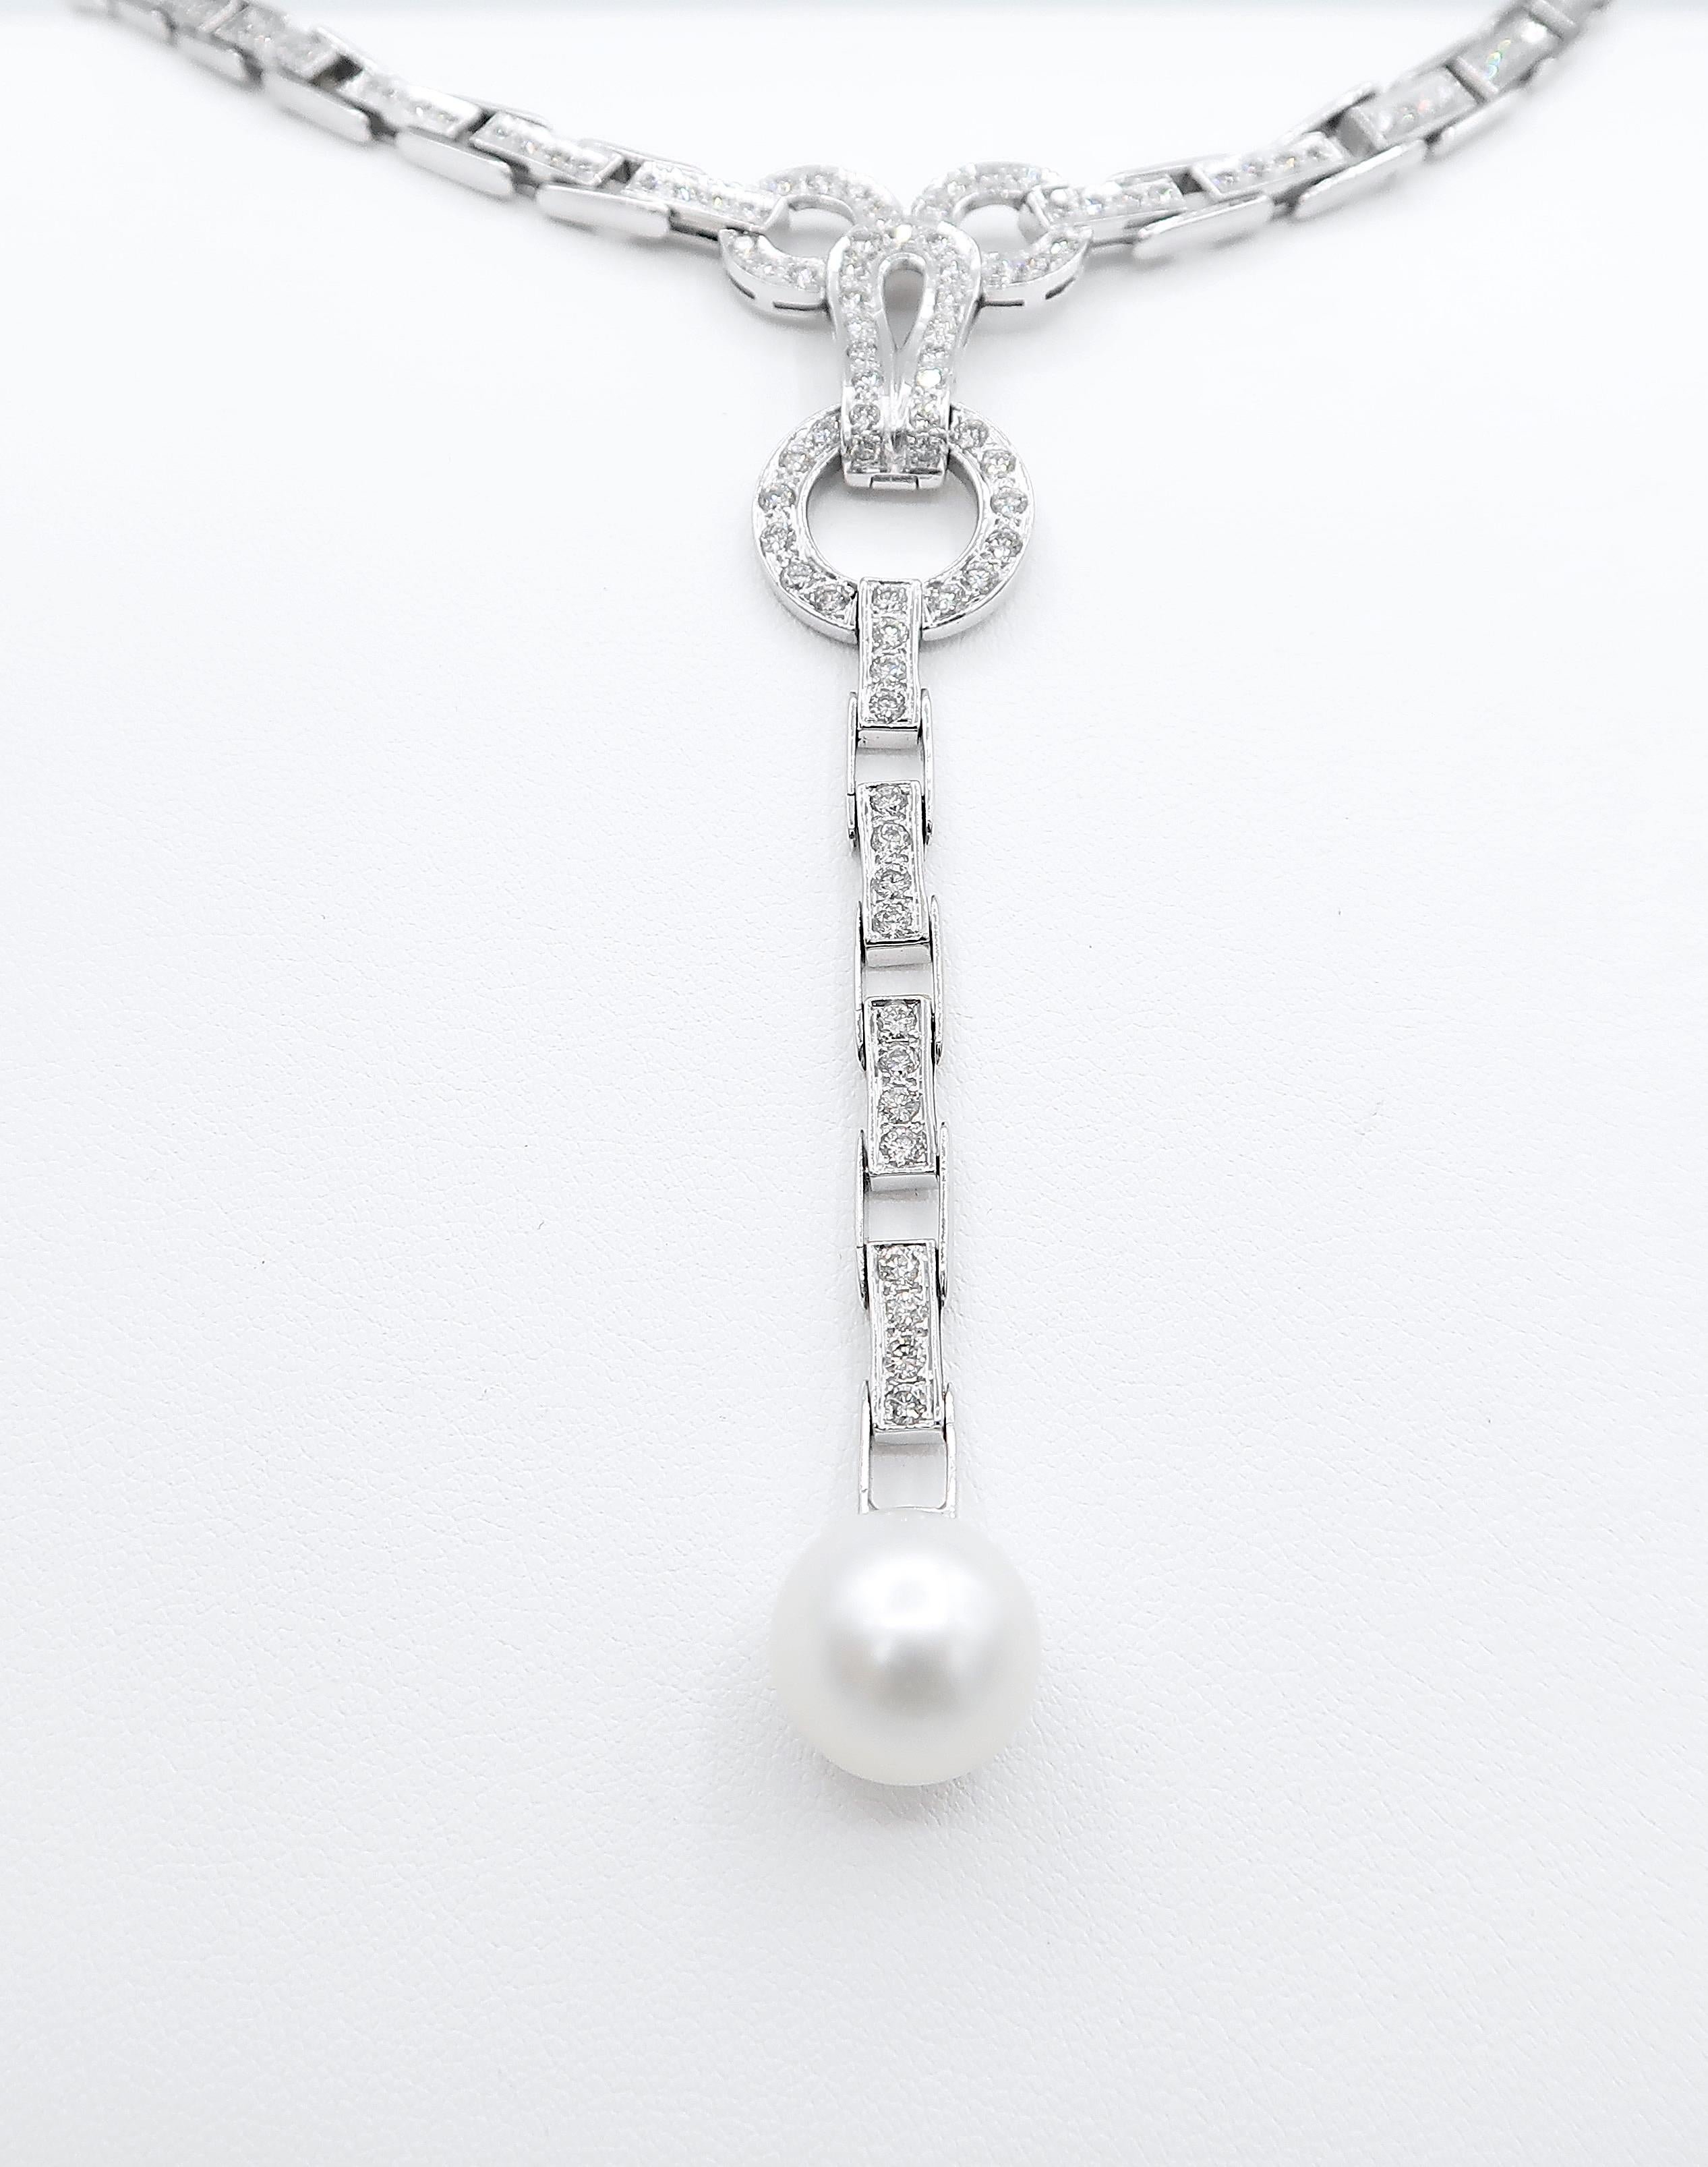 tahitian pearl drop necklace